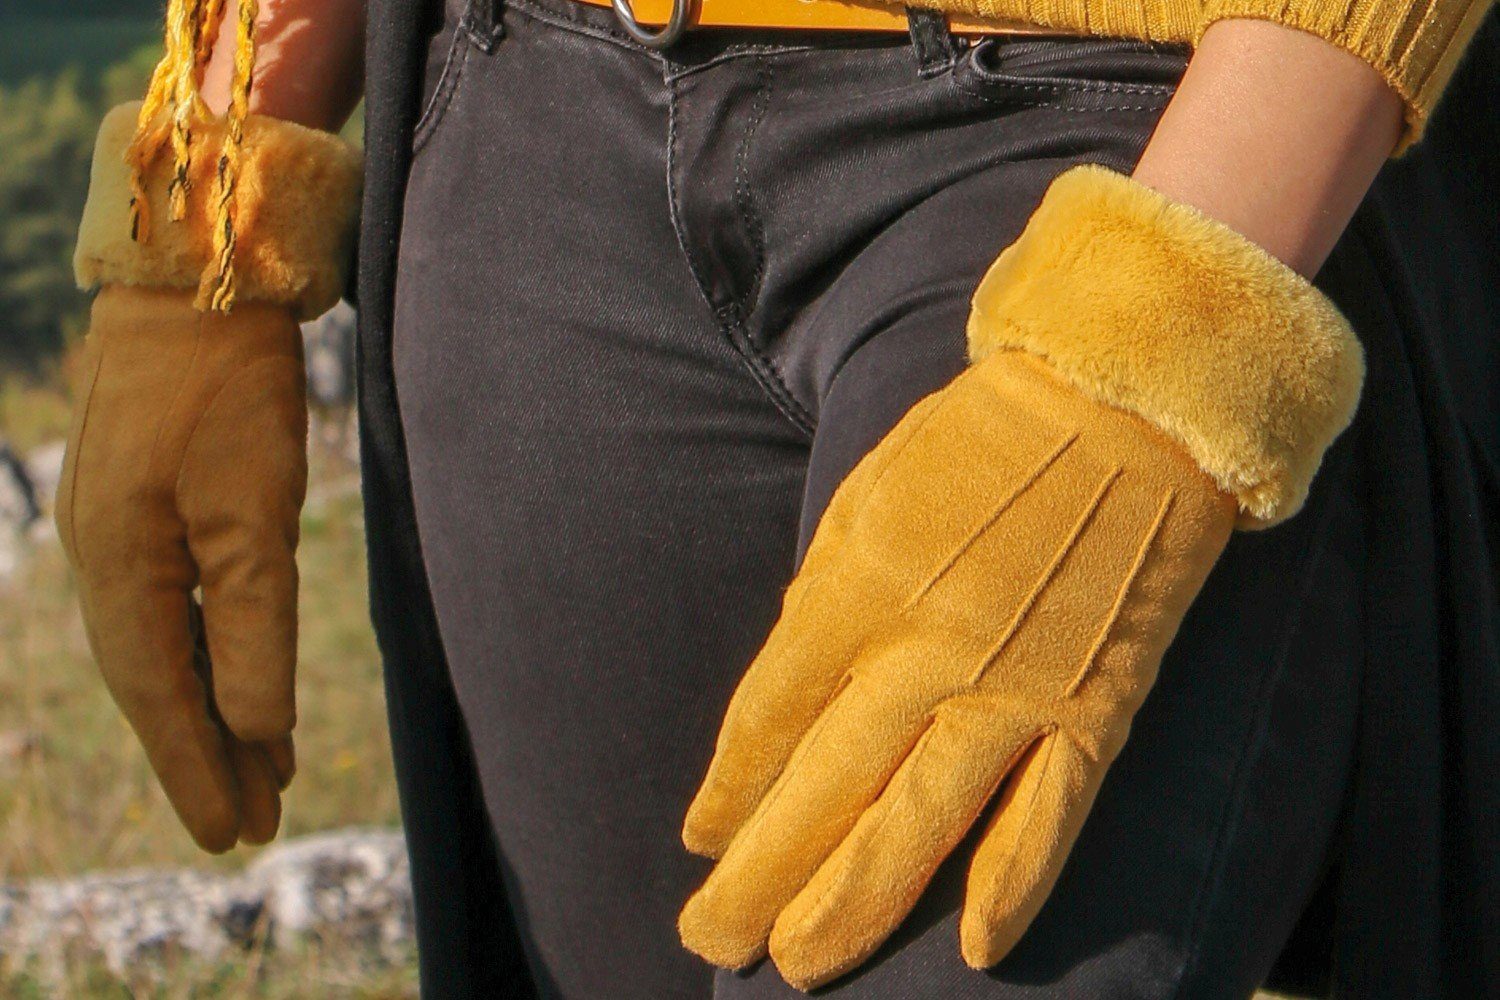 Beige Kunstfell Fleecehandschuhe styleBREAKER Handschuhe Unifarbene Touchscreen mit